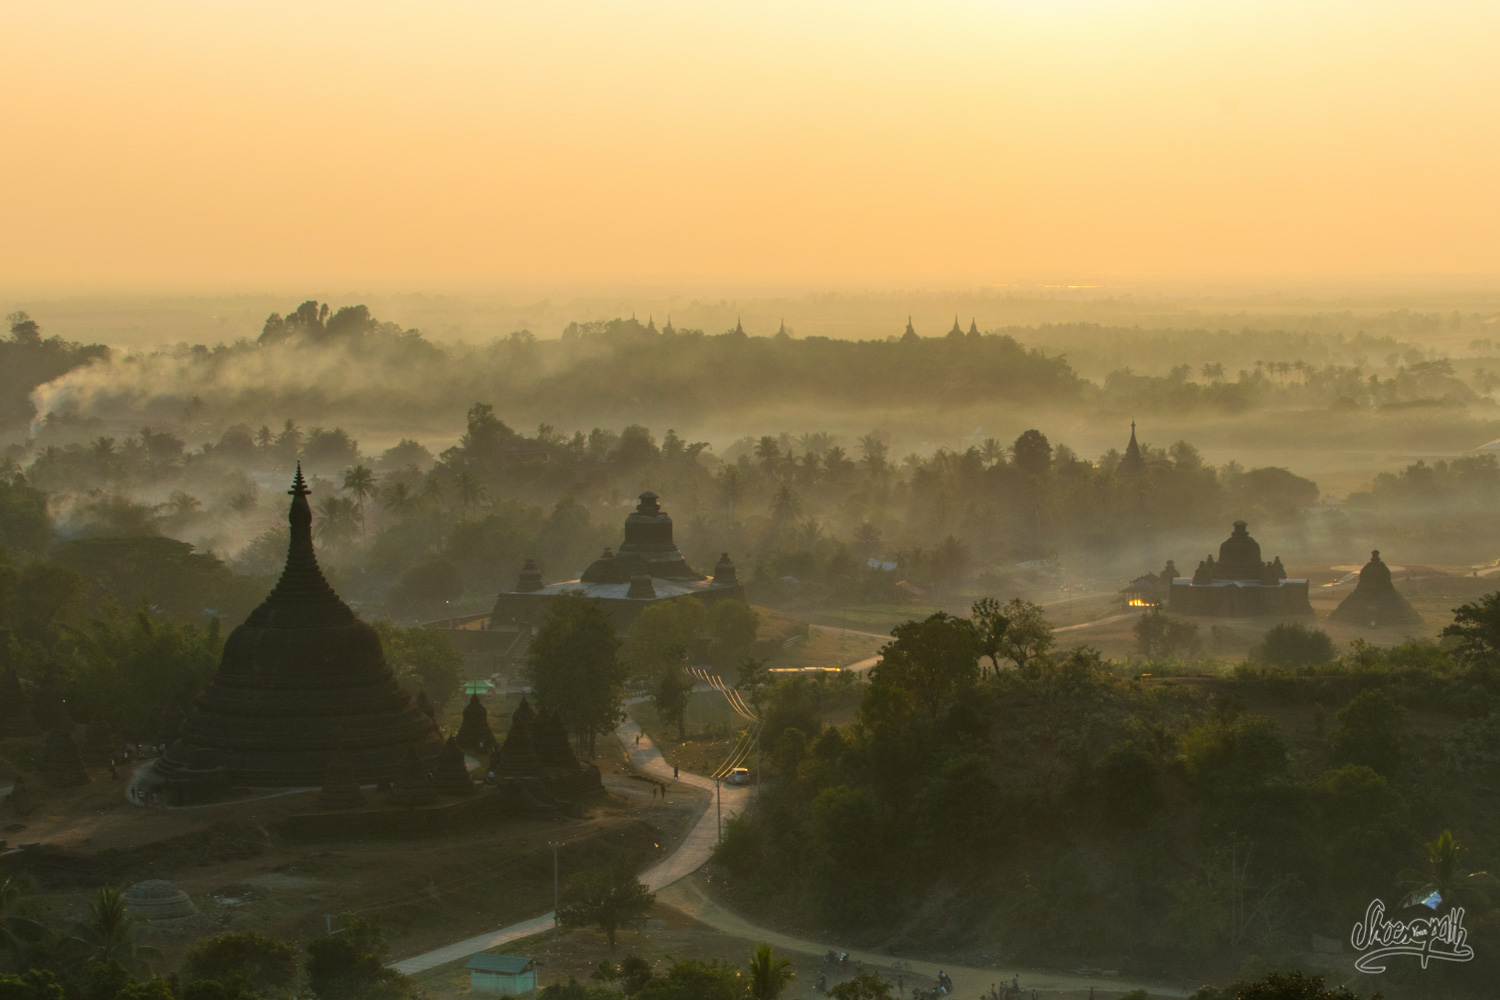 Fantastic sunset over the pagodas of Mrauk U